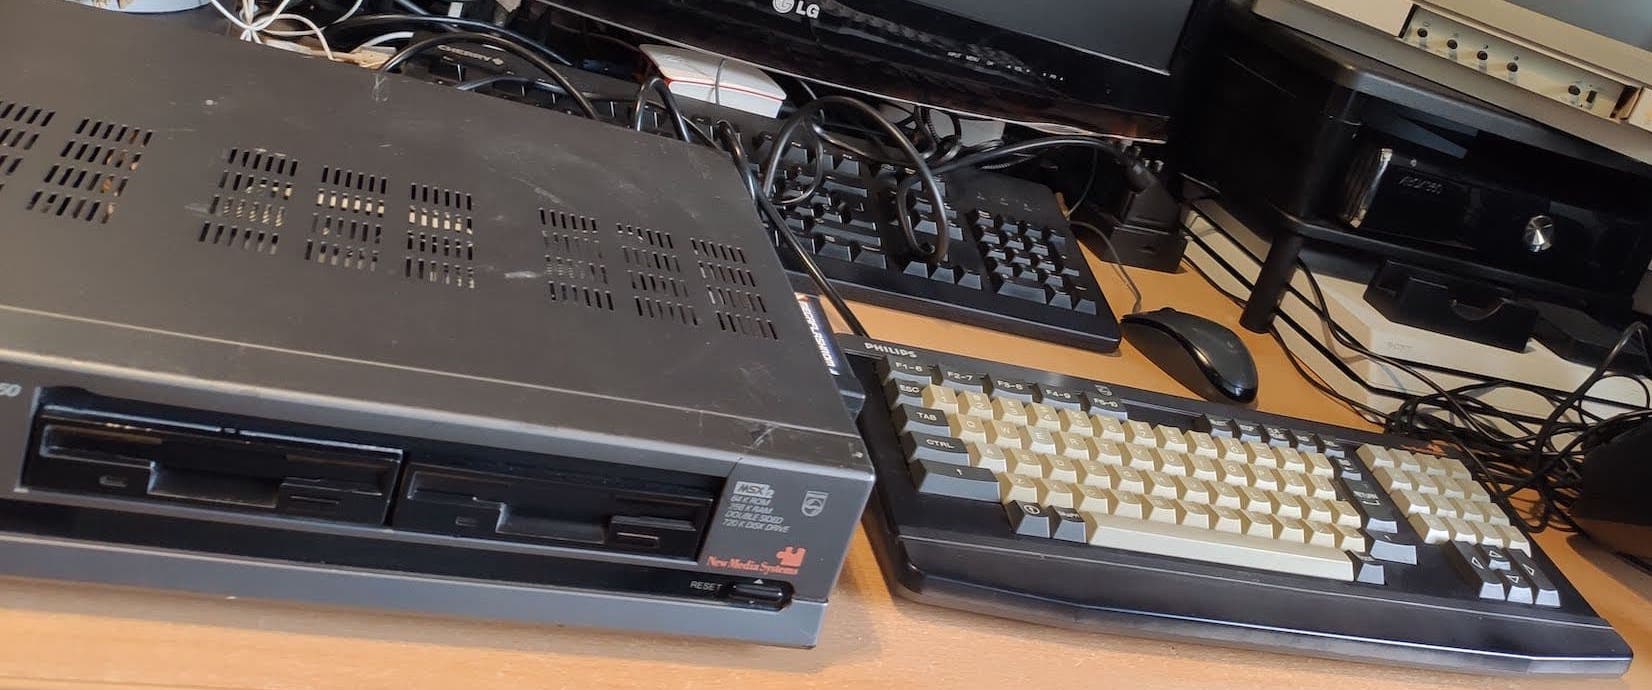 MSX 2 Philips NMS 8250